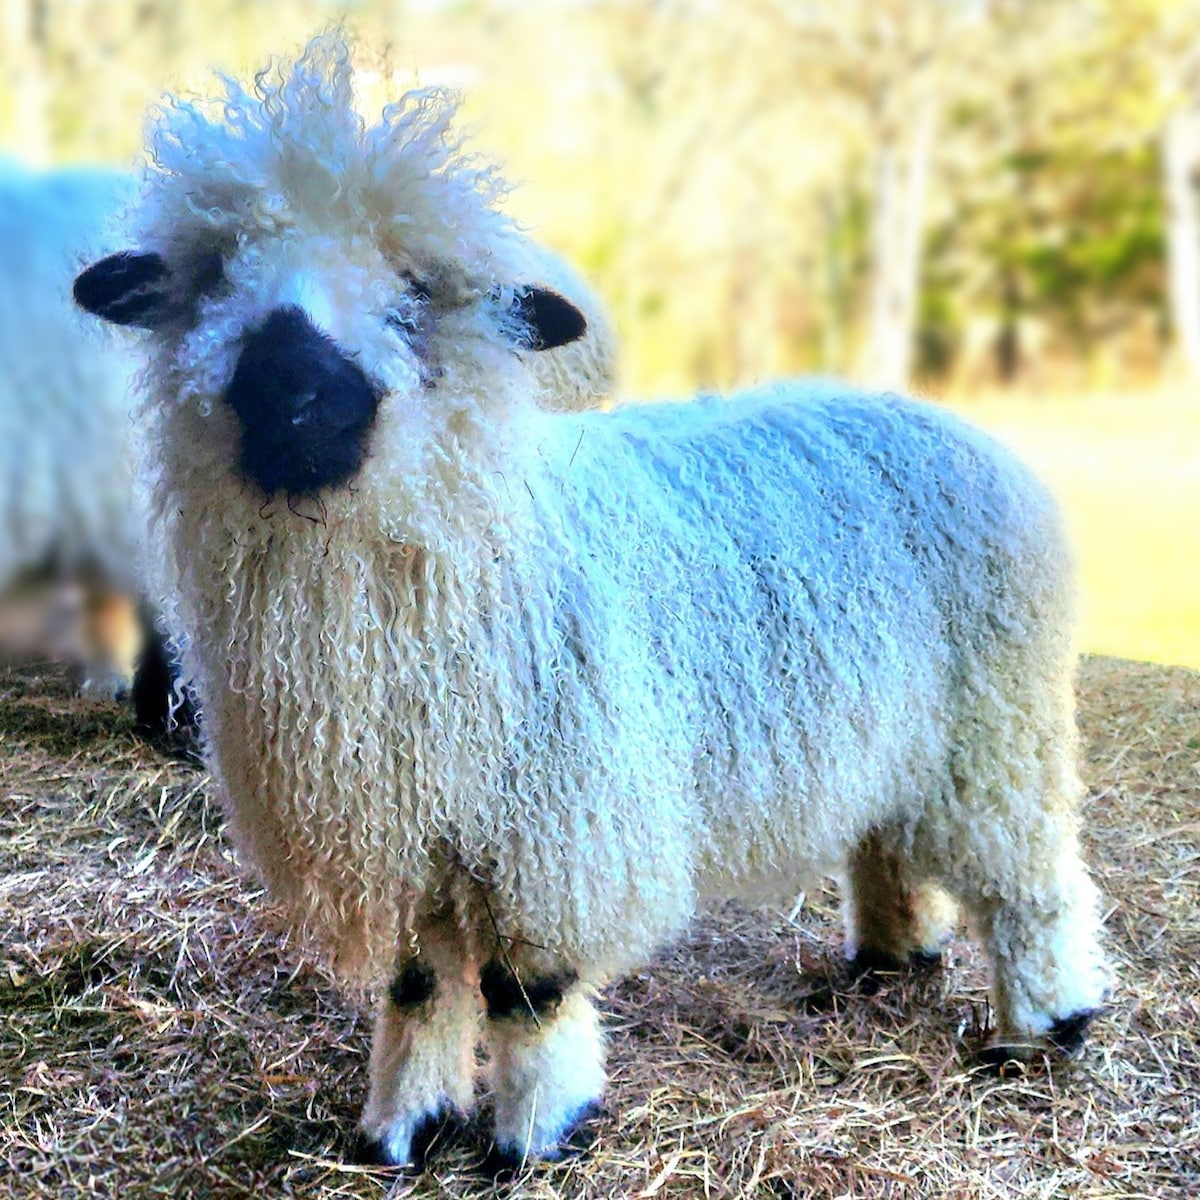 Camp w/the World's Cutest Sheep!